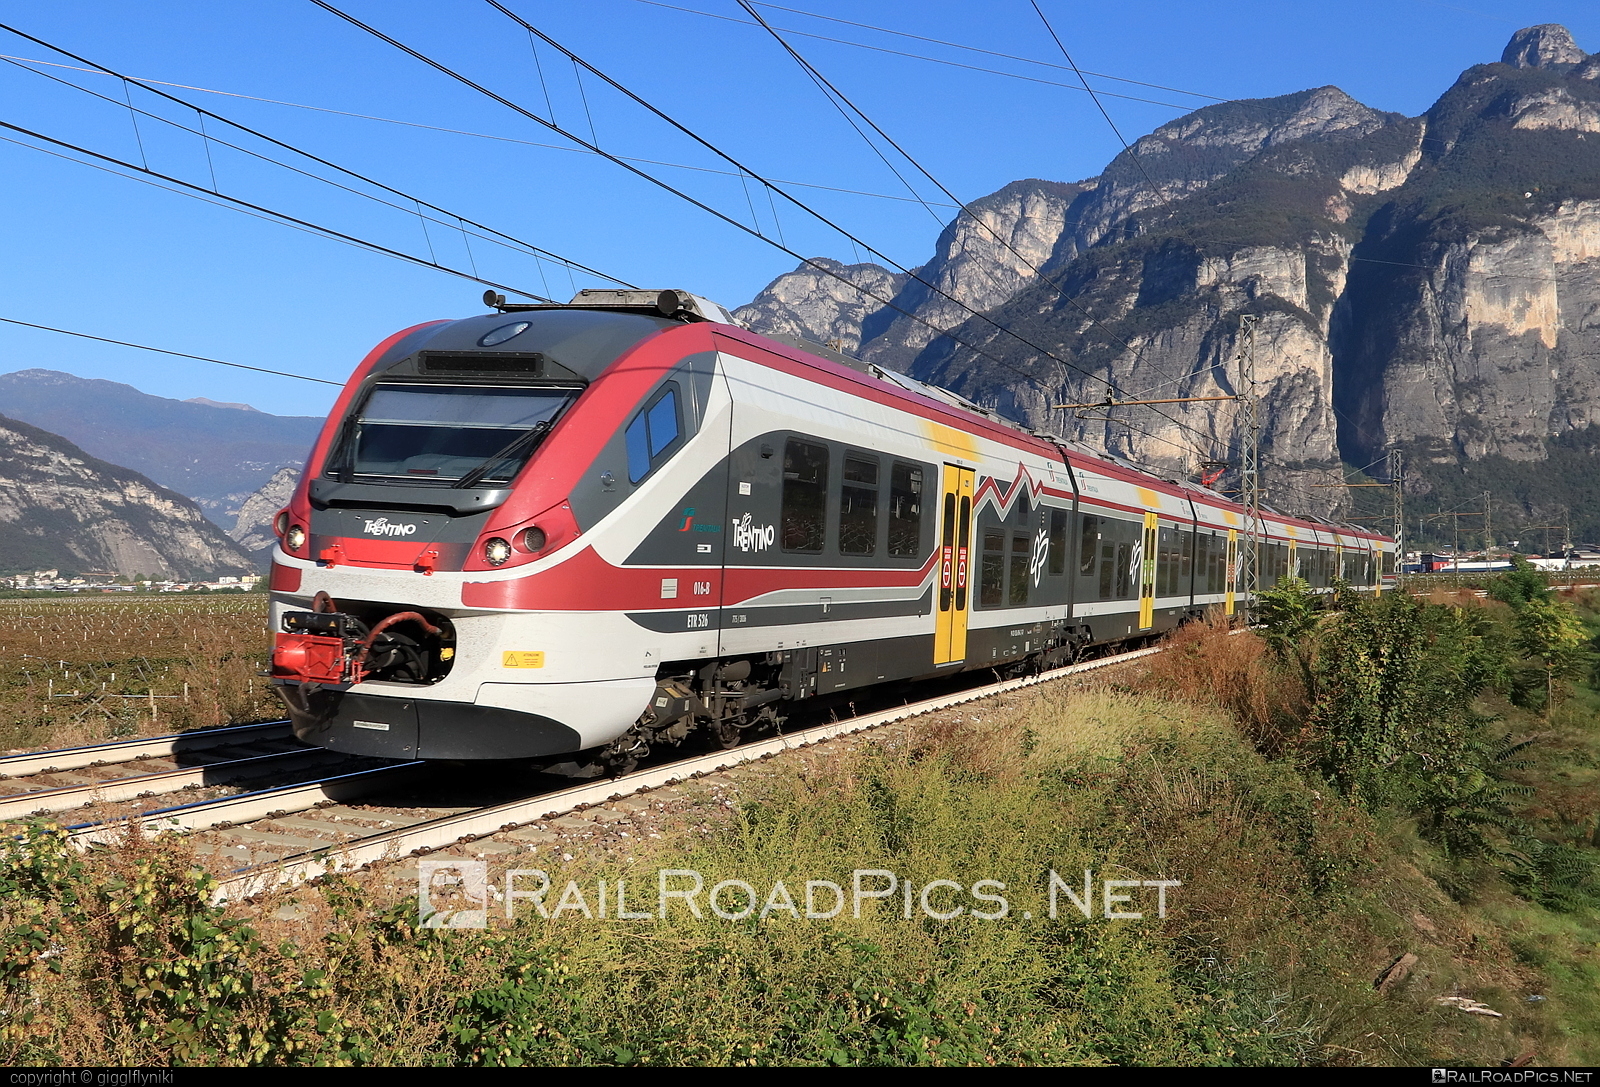 Alstom Coradia Meridian (ETR.526) - 526 096 operated by Trenitalia S.p.A. #alstom #alstomCoradia #coradia #coradiaMeridian #etr526 #ferroviedellostato #fs #fsitaliane #trenitalia #trenitaliaspa